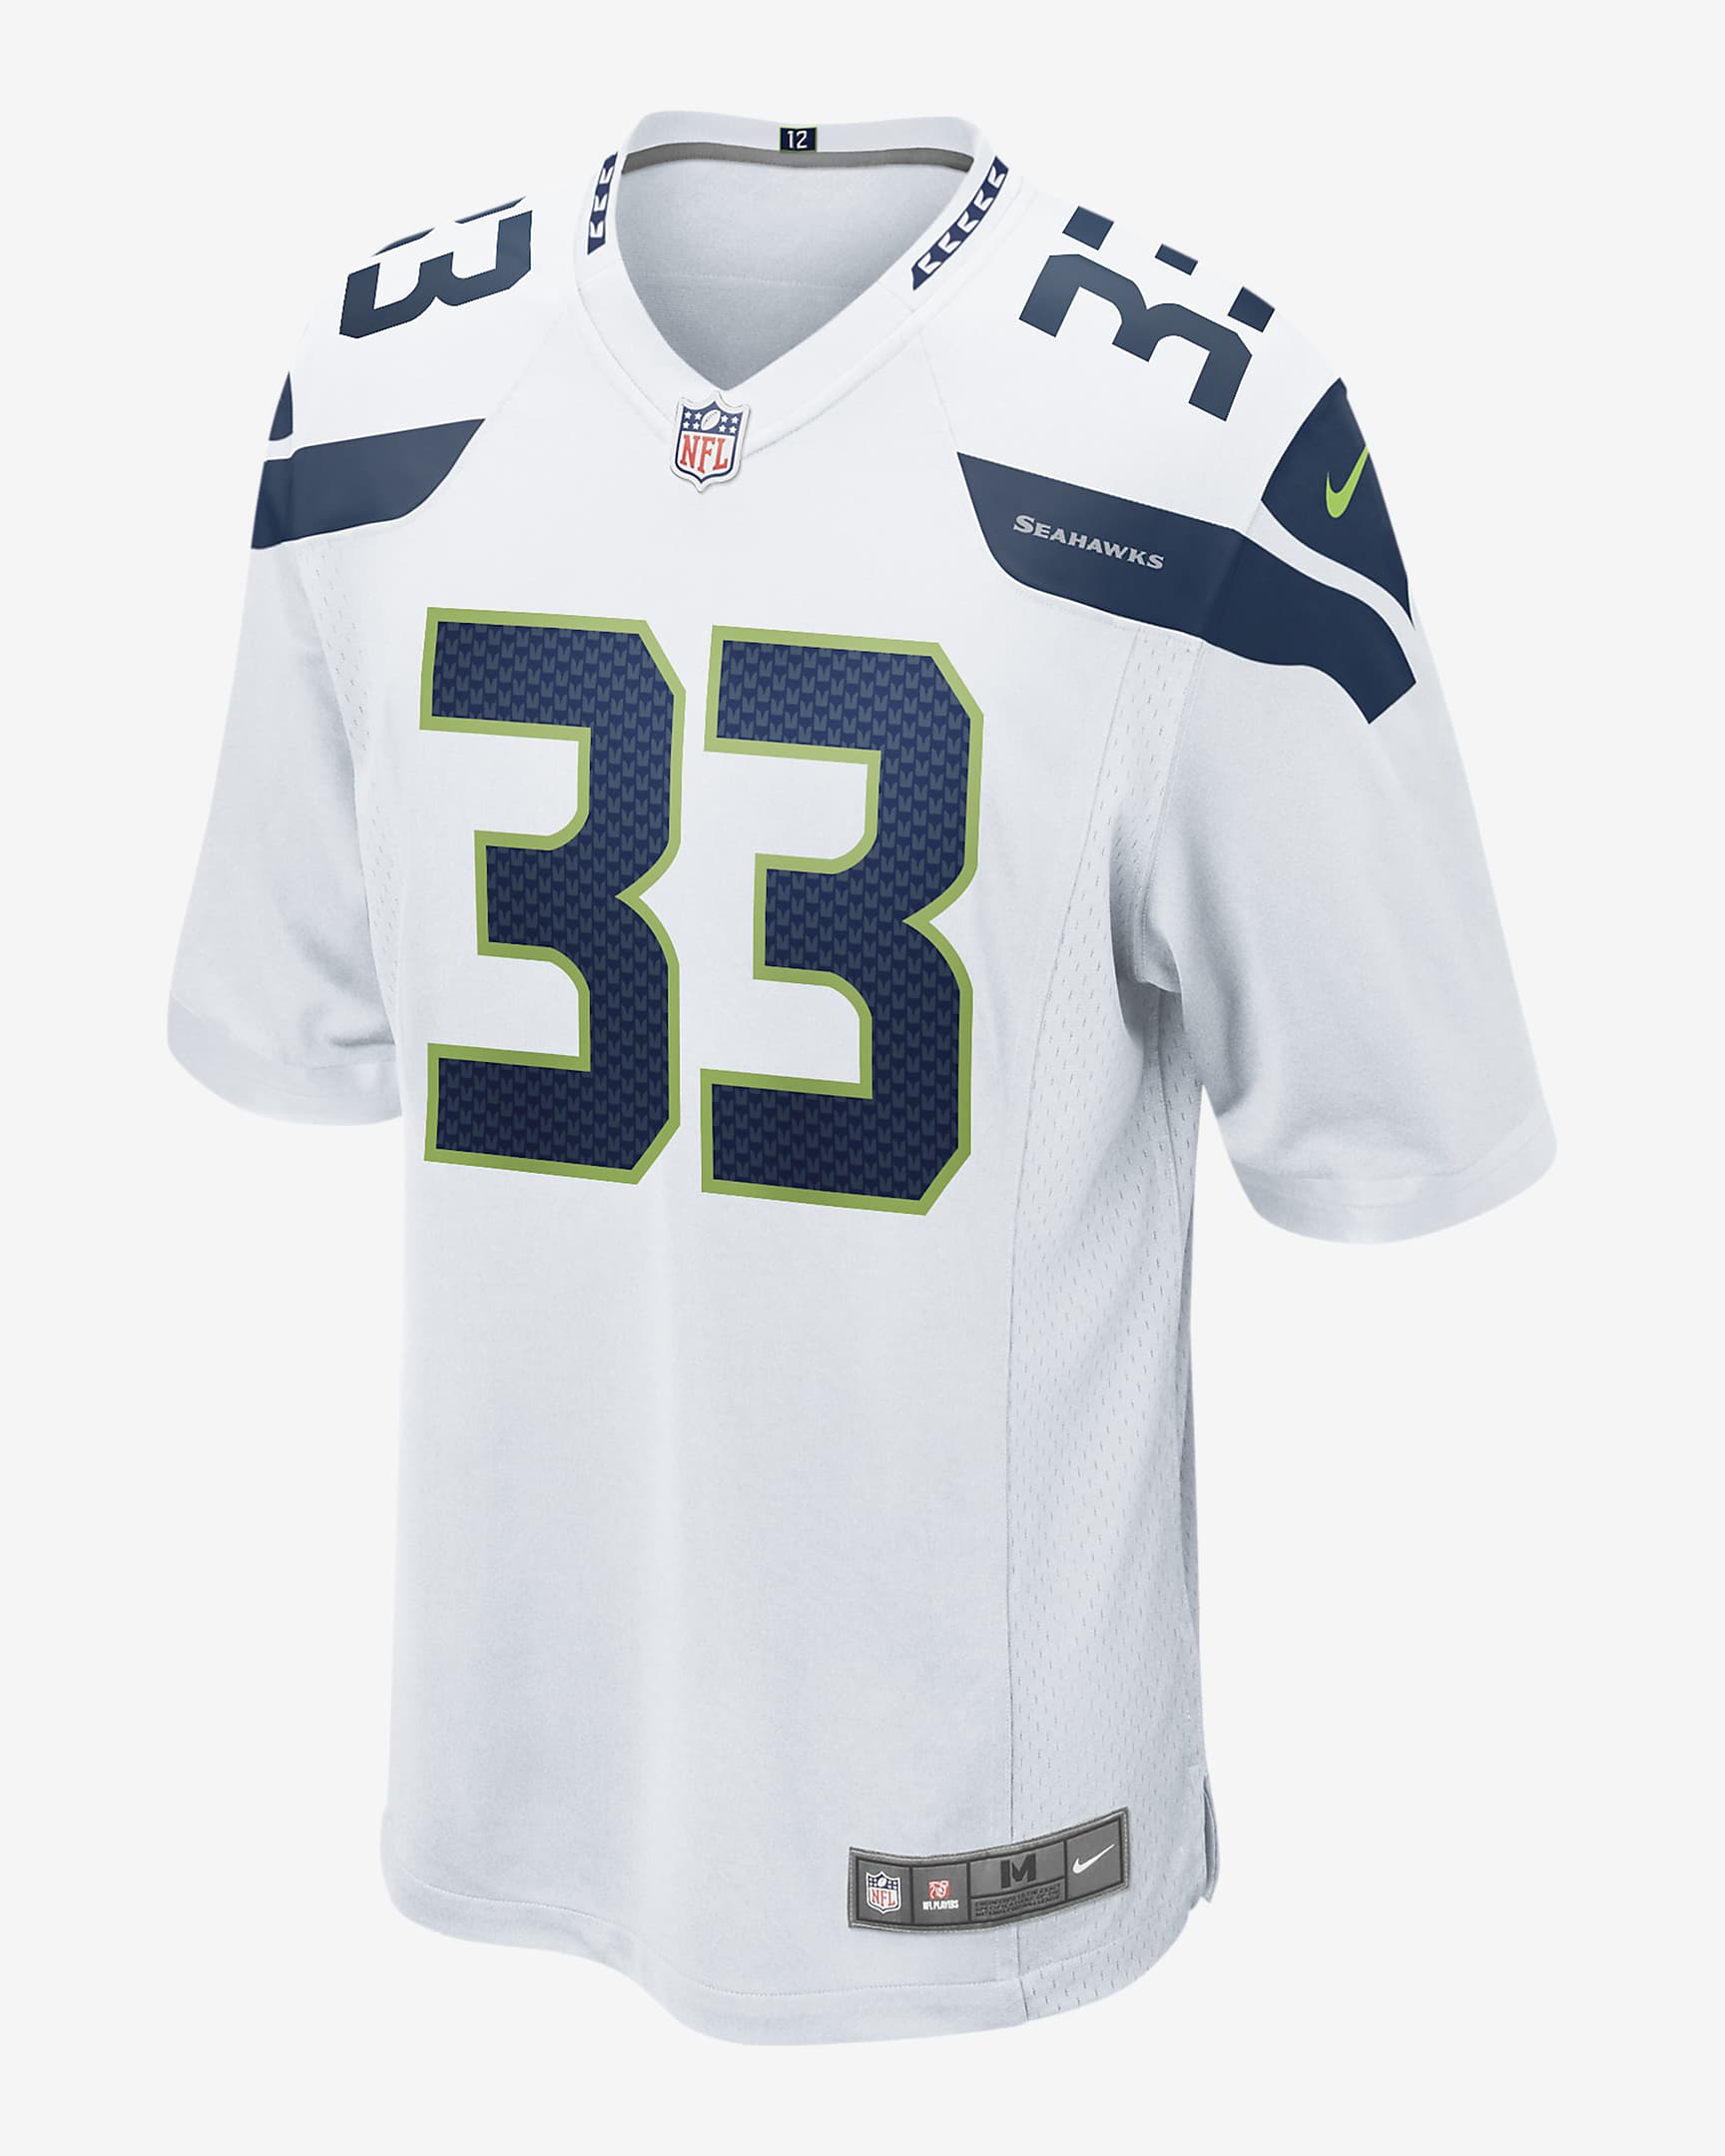 NFL Seattle Seahawks (Jamal Adams) Men's Game Football Jersey. Nike.com